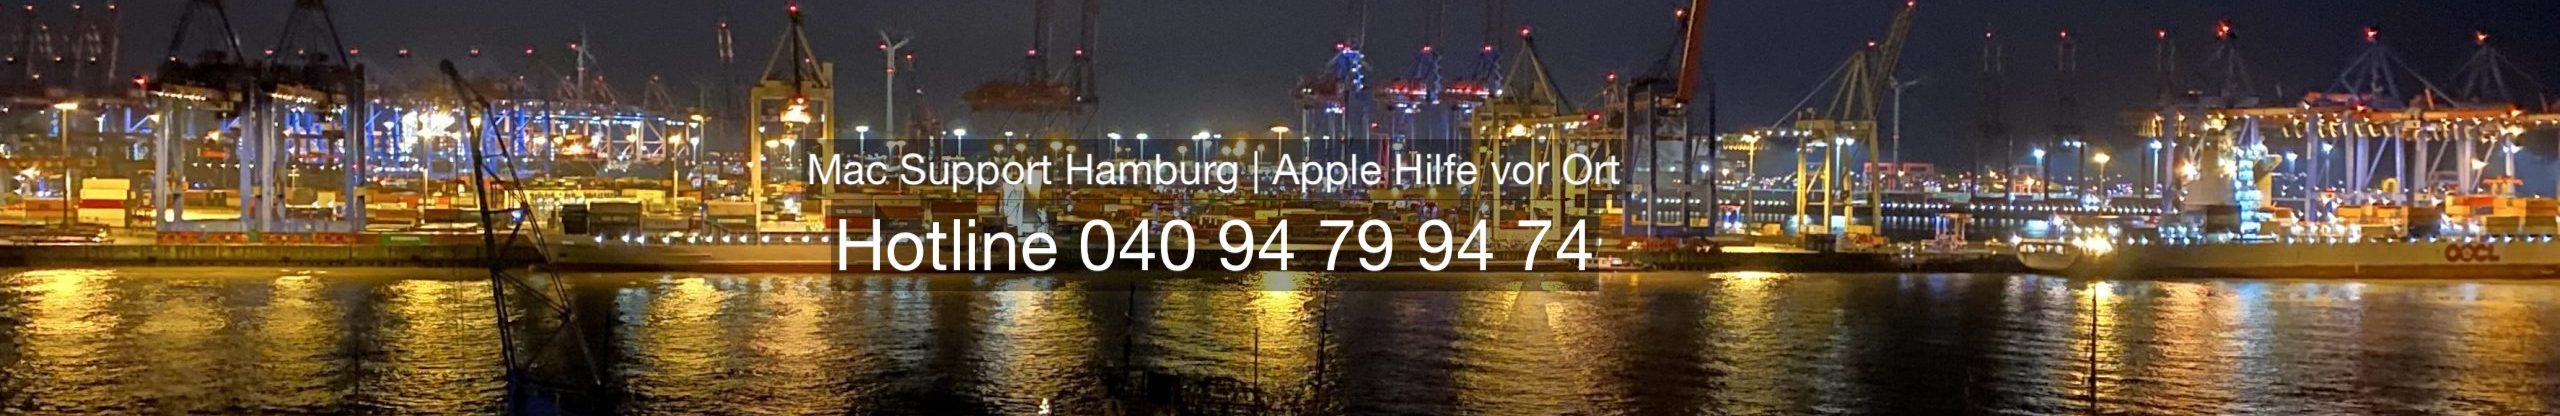 Mac Support Hamburg